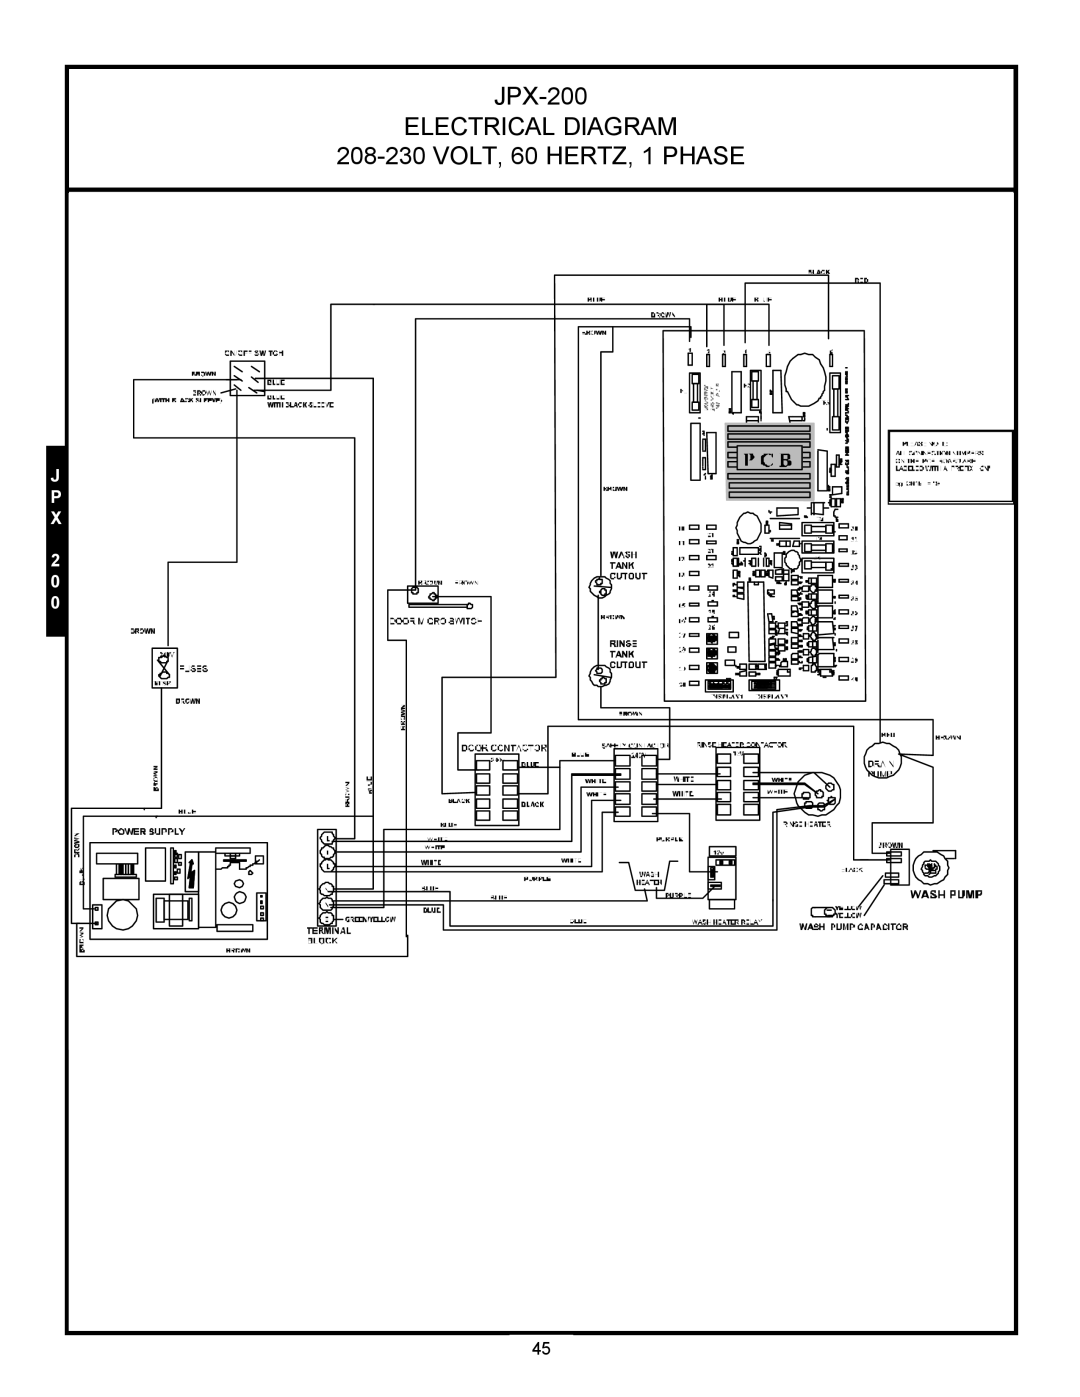 Jackson JPX-200, JPX-160, jpx-140 service manual Electrical Diagram, VOLT, 60 HERTZ, 1 PHASE 